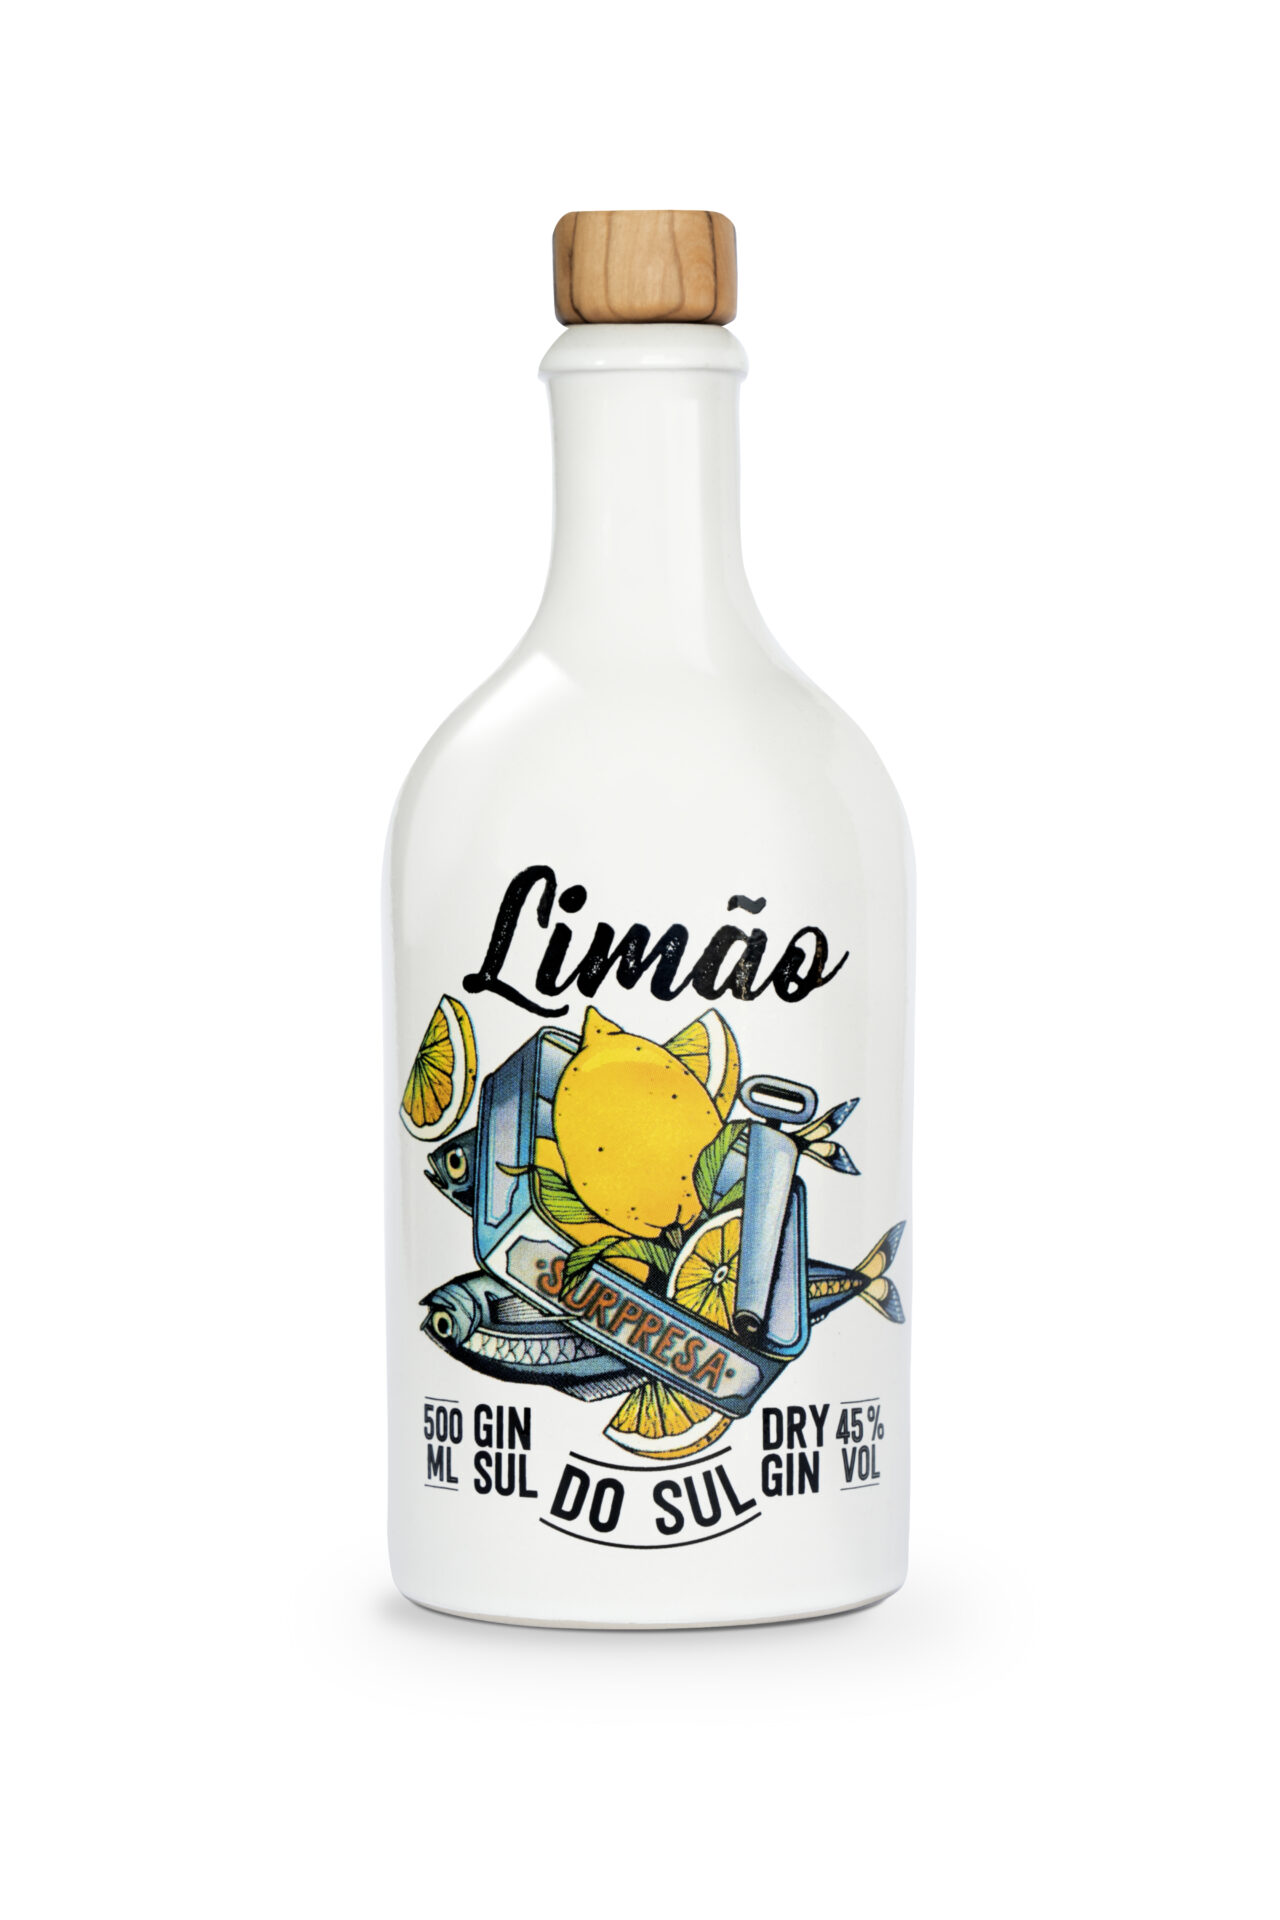 Gin Sul – Sonderedition 2020 „Limao do Sul“ – Dry Gin